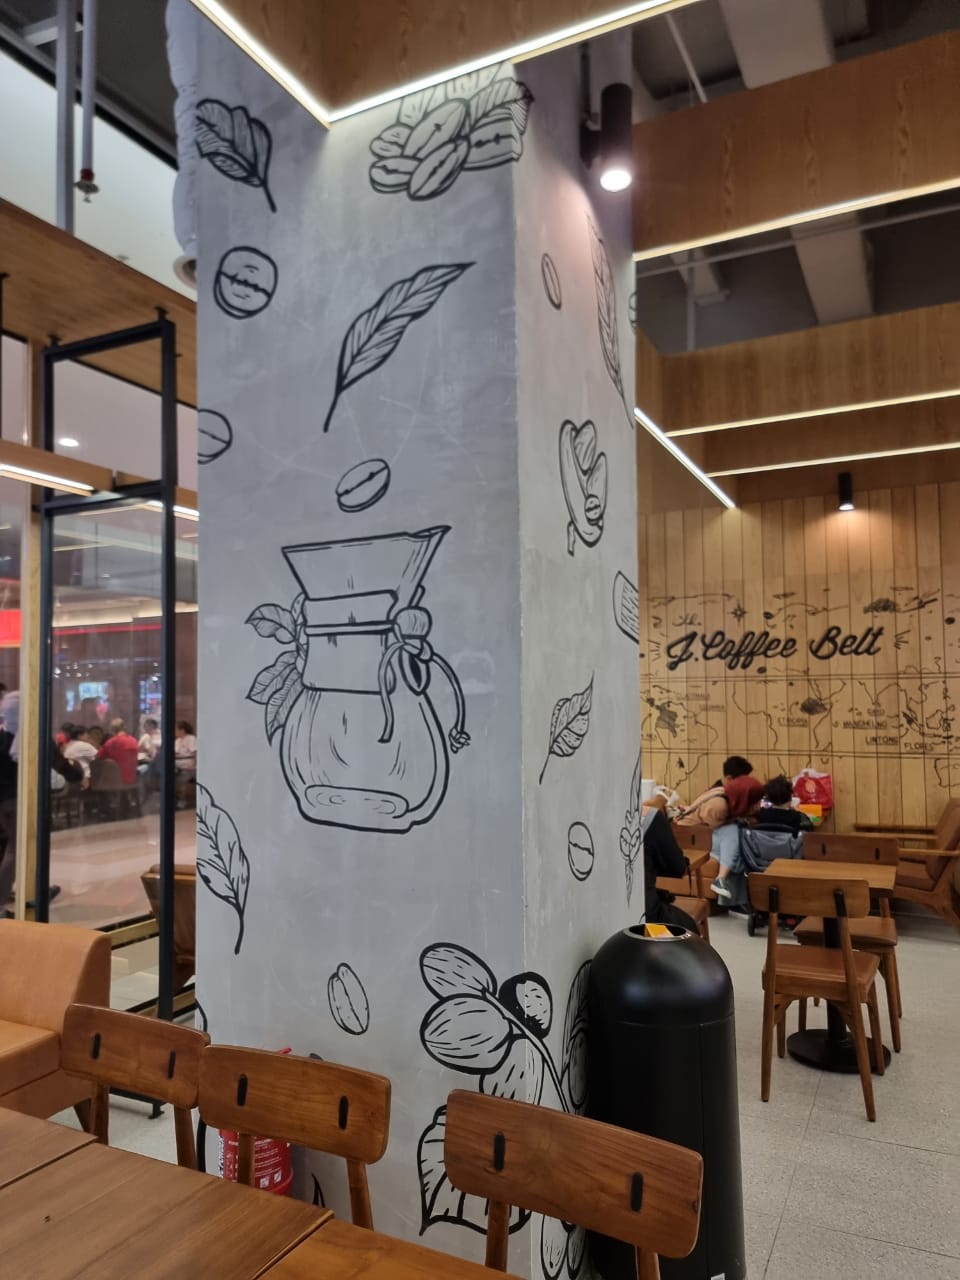 Affoedable Mural Art Coffee Cup And Doughnut in J.CO Doughnut In Putrajaya